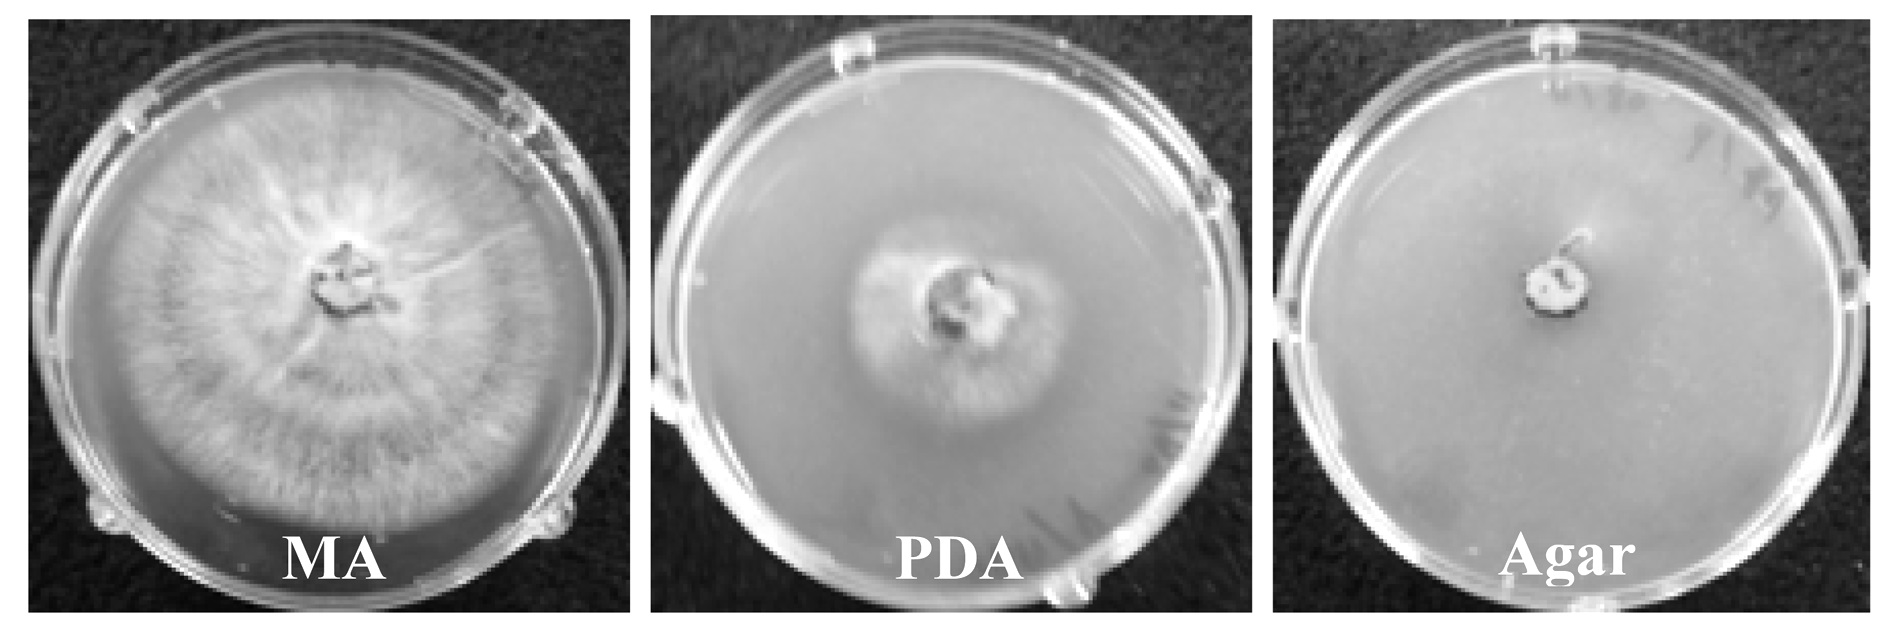 P. linteus growth depending on the various media: MA (maltose
extract agar), PDA (potato dextrose extract agar) and Agar-medium
(only agar containing medium).